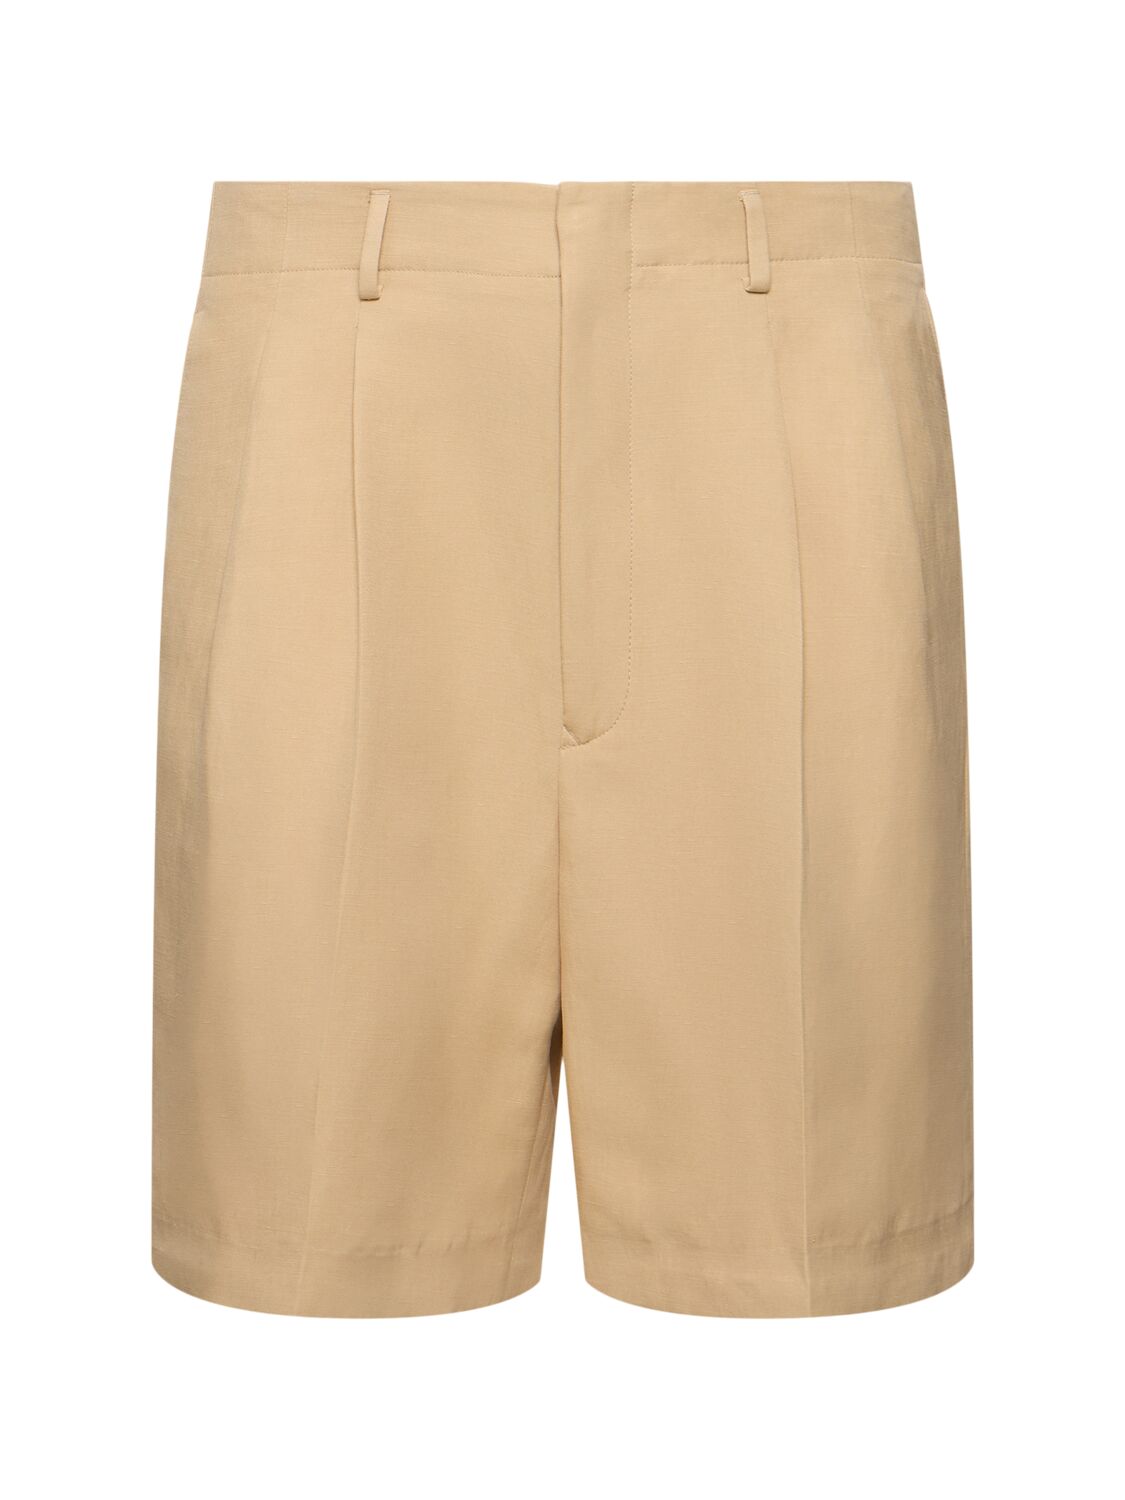 Image of Joetsu Pleated Linen & Silk Shorts